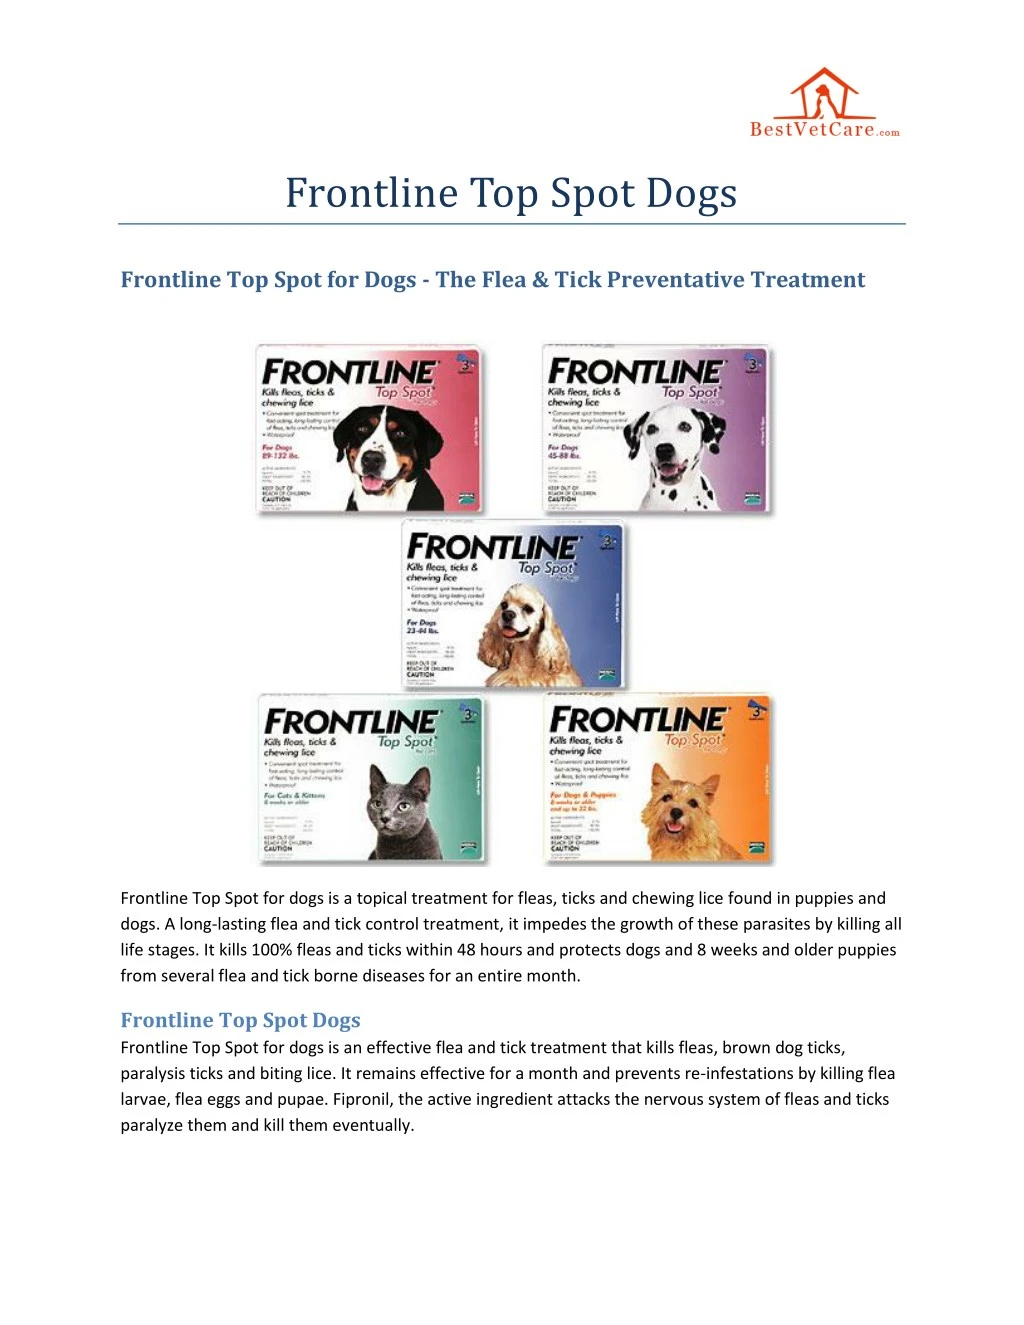 frontline top spot dogs